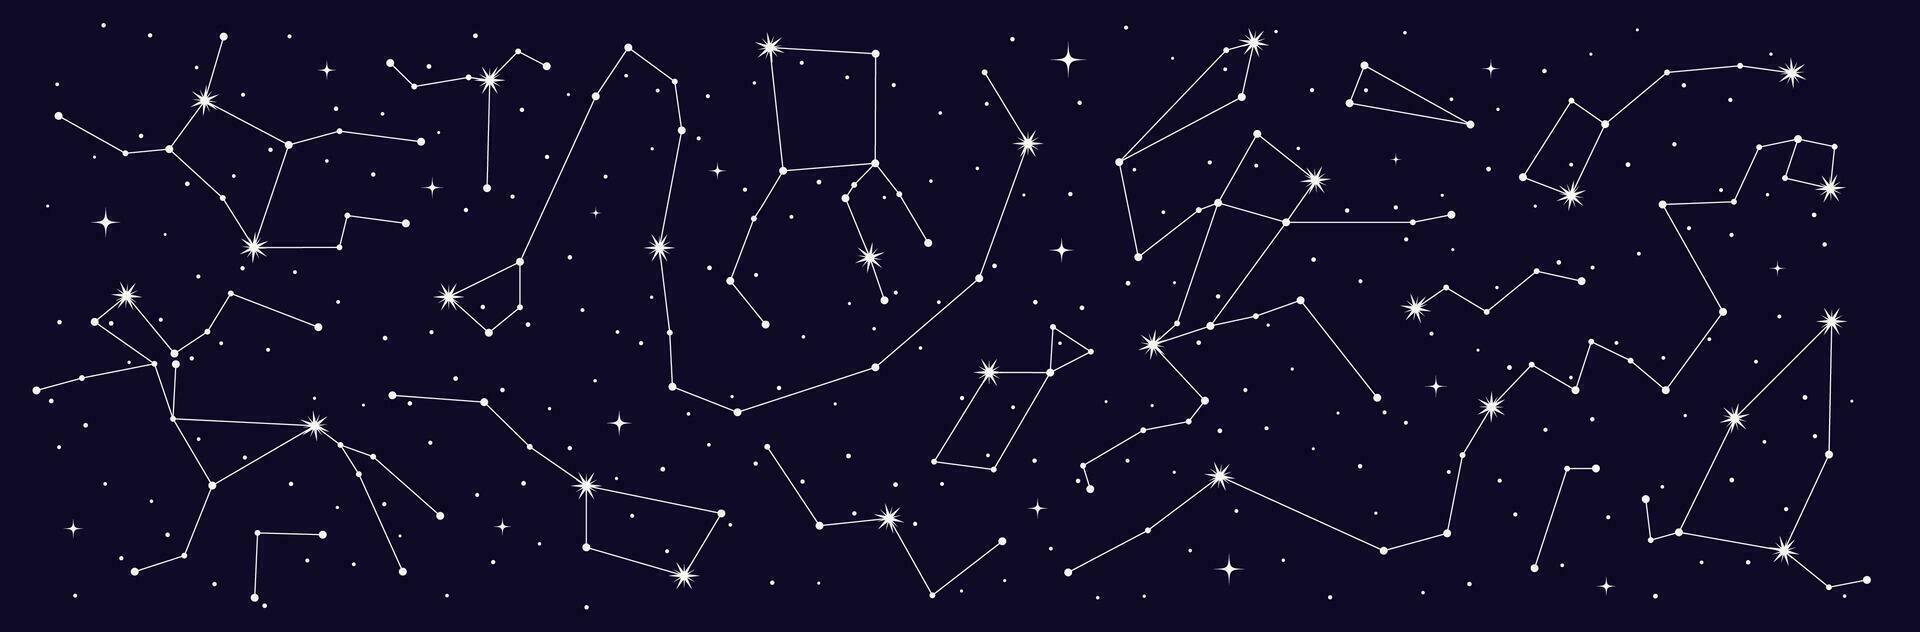 Mystiker Astrologie, Star Konstellation Nacht Himmel Karte vektor